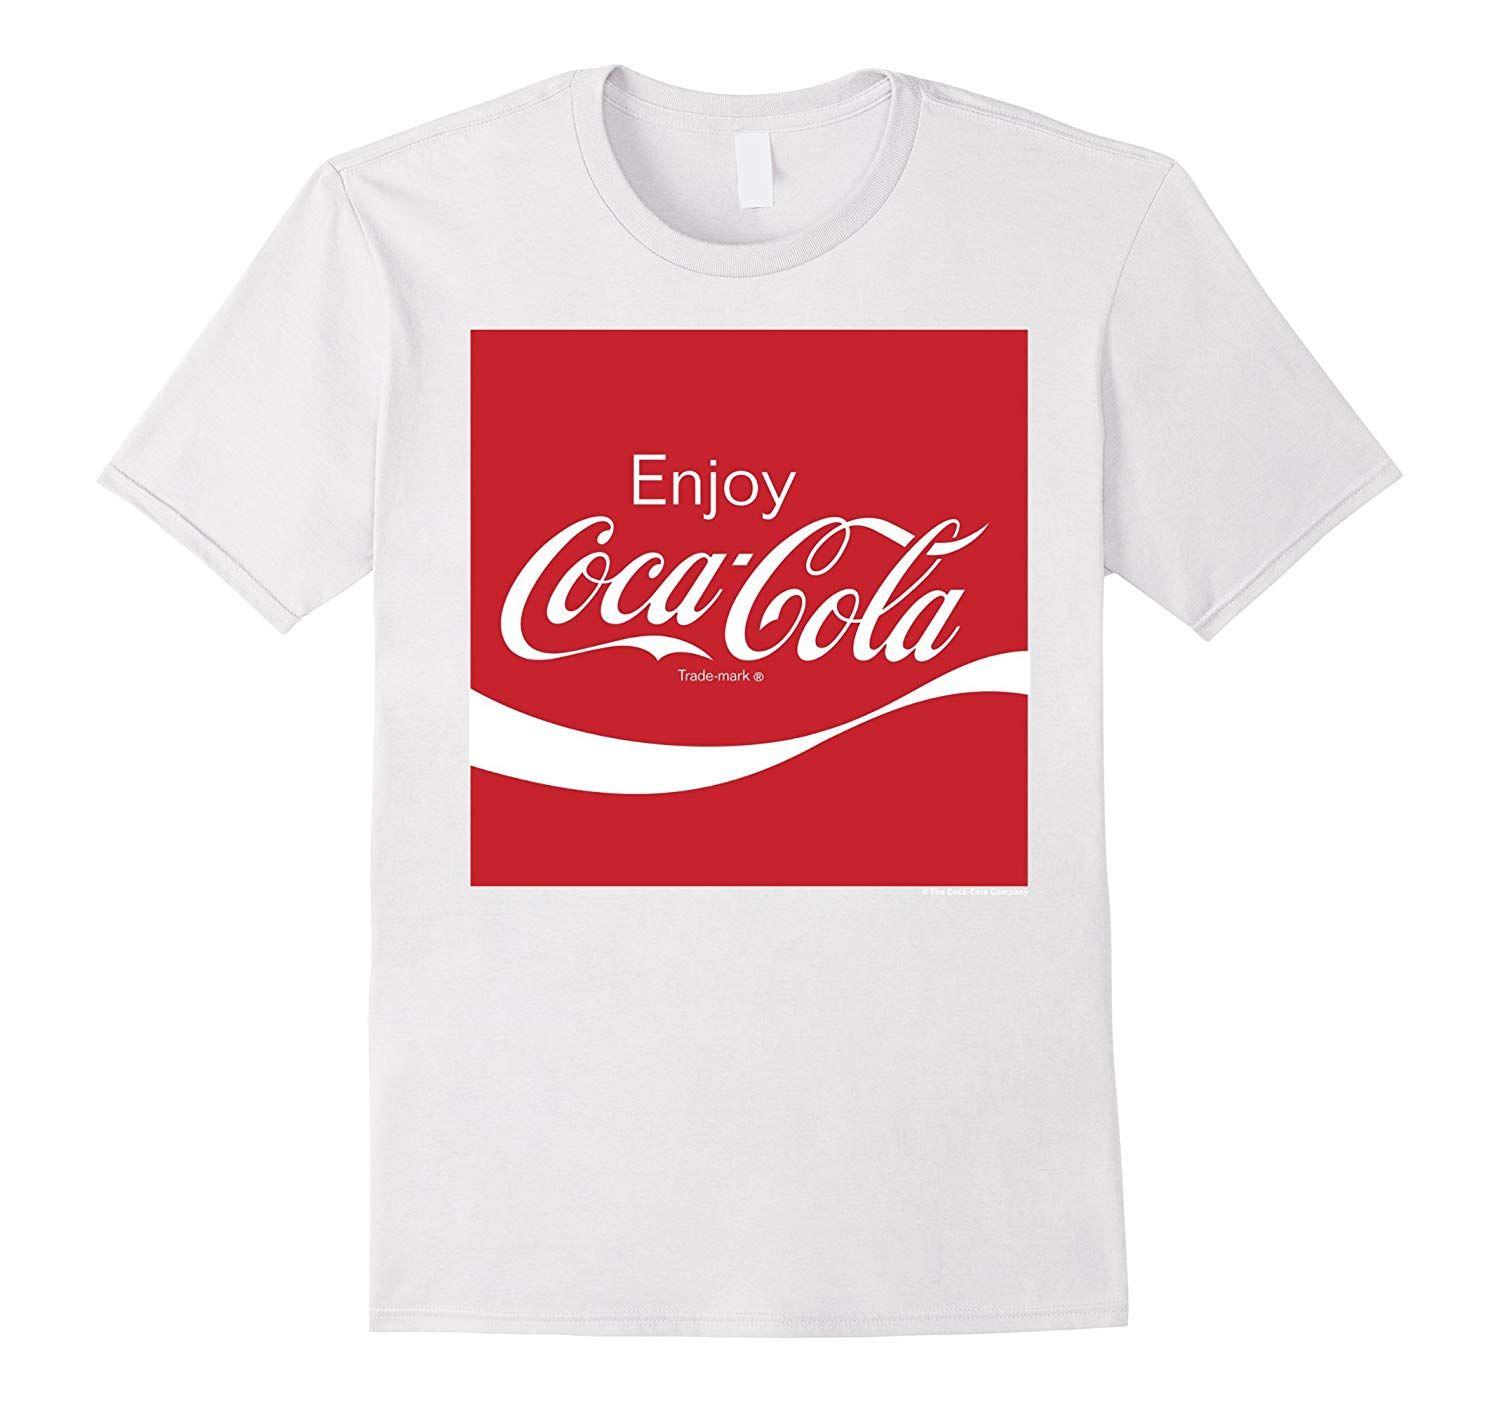 White and Red Square Logo - Coca Cola Red Square Enjoy Logo Graphic T Shirt ANZ